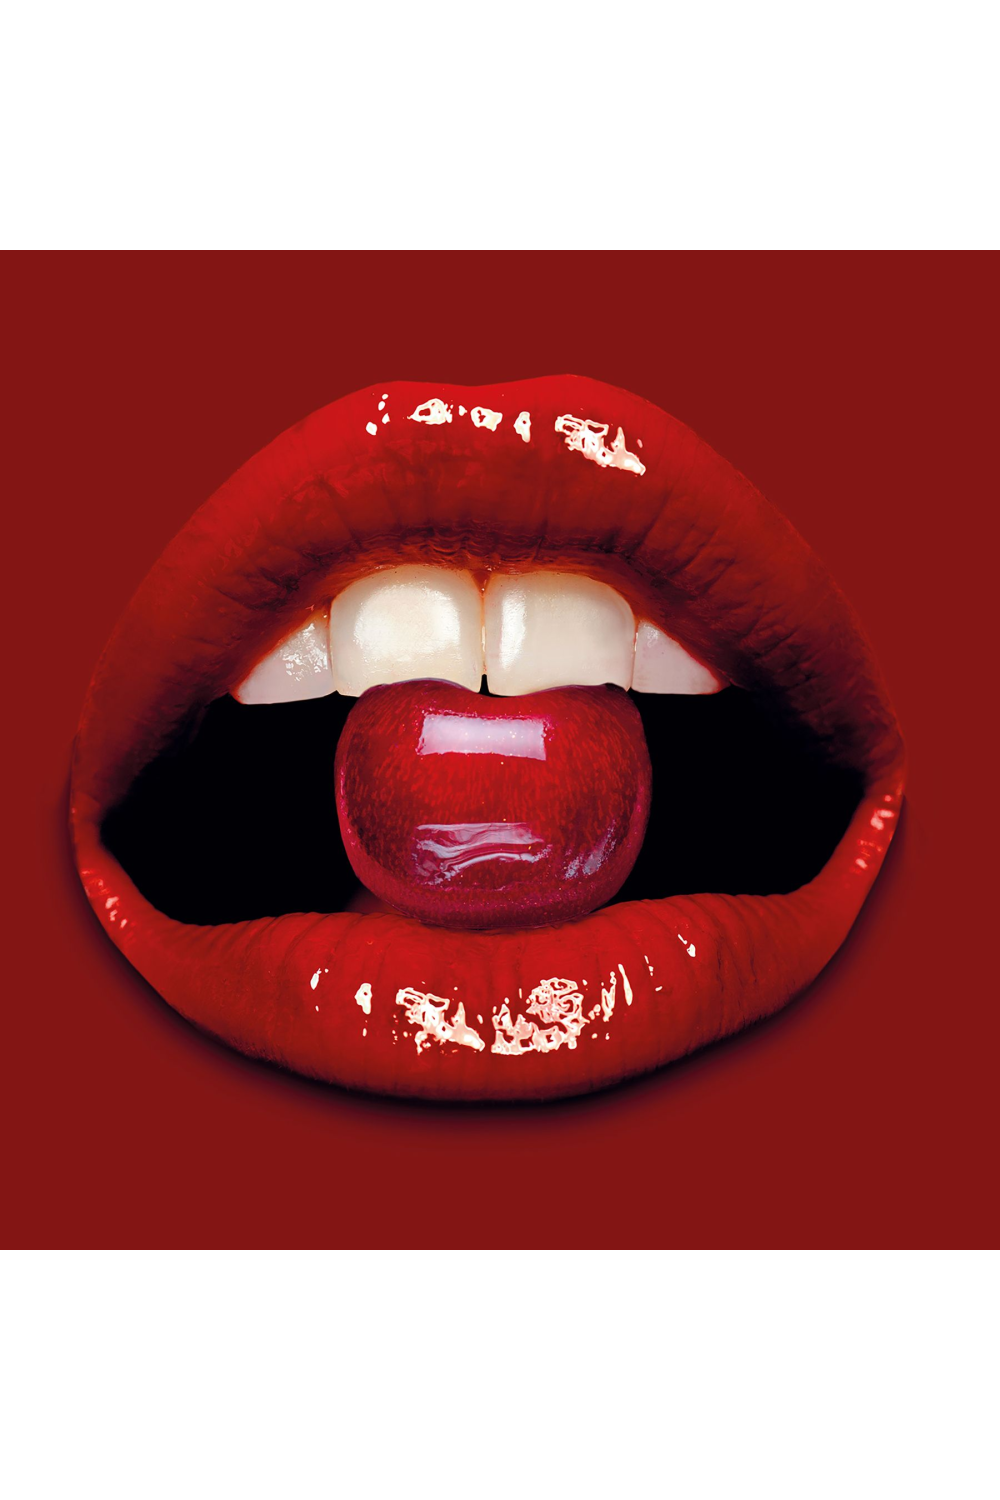 Woman's Mouth Plexiglass Artwork | Andrew Martin Cherry Lips | Oroa.com